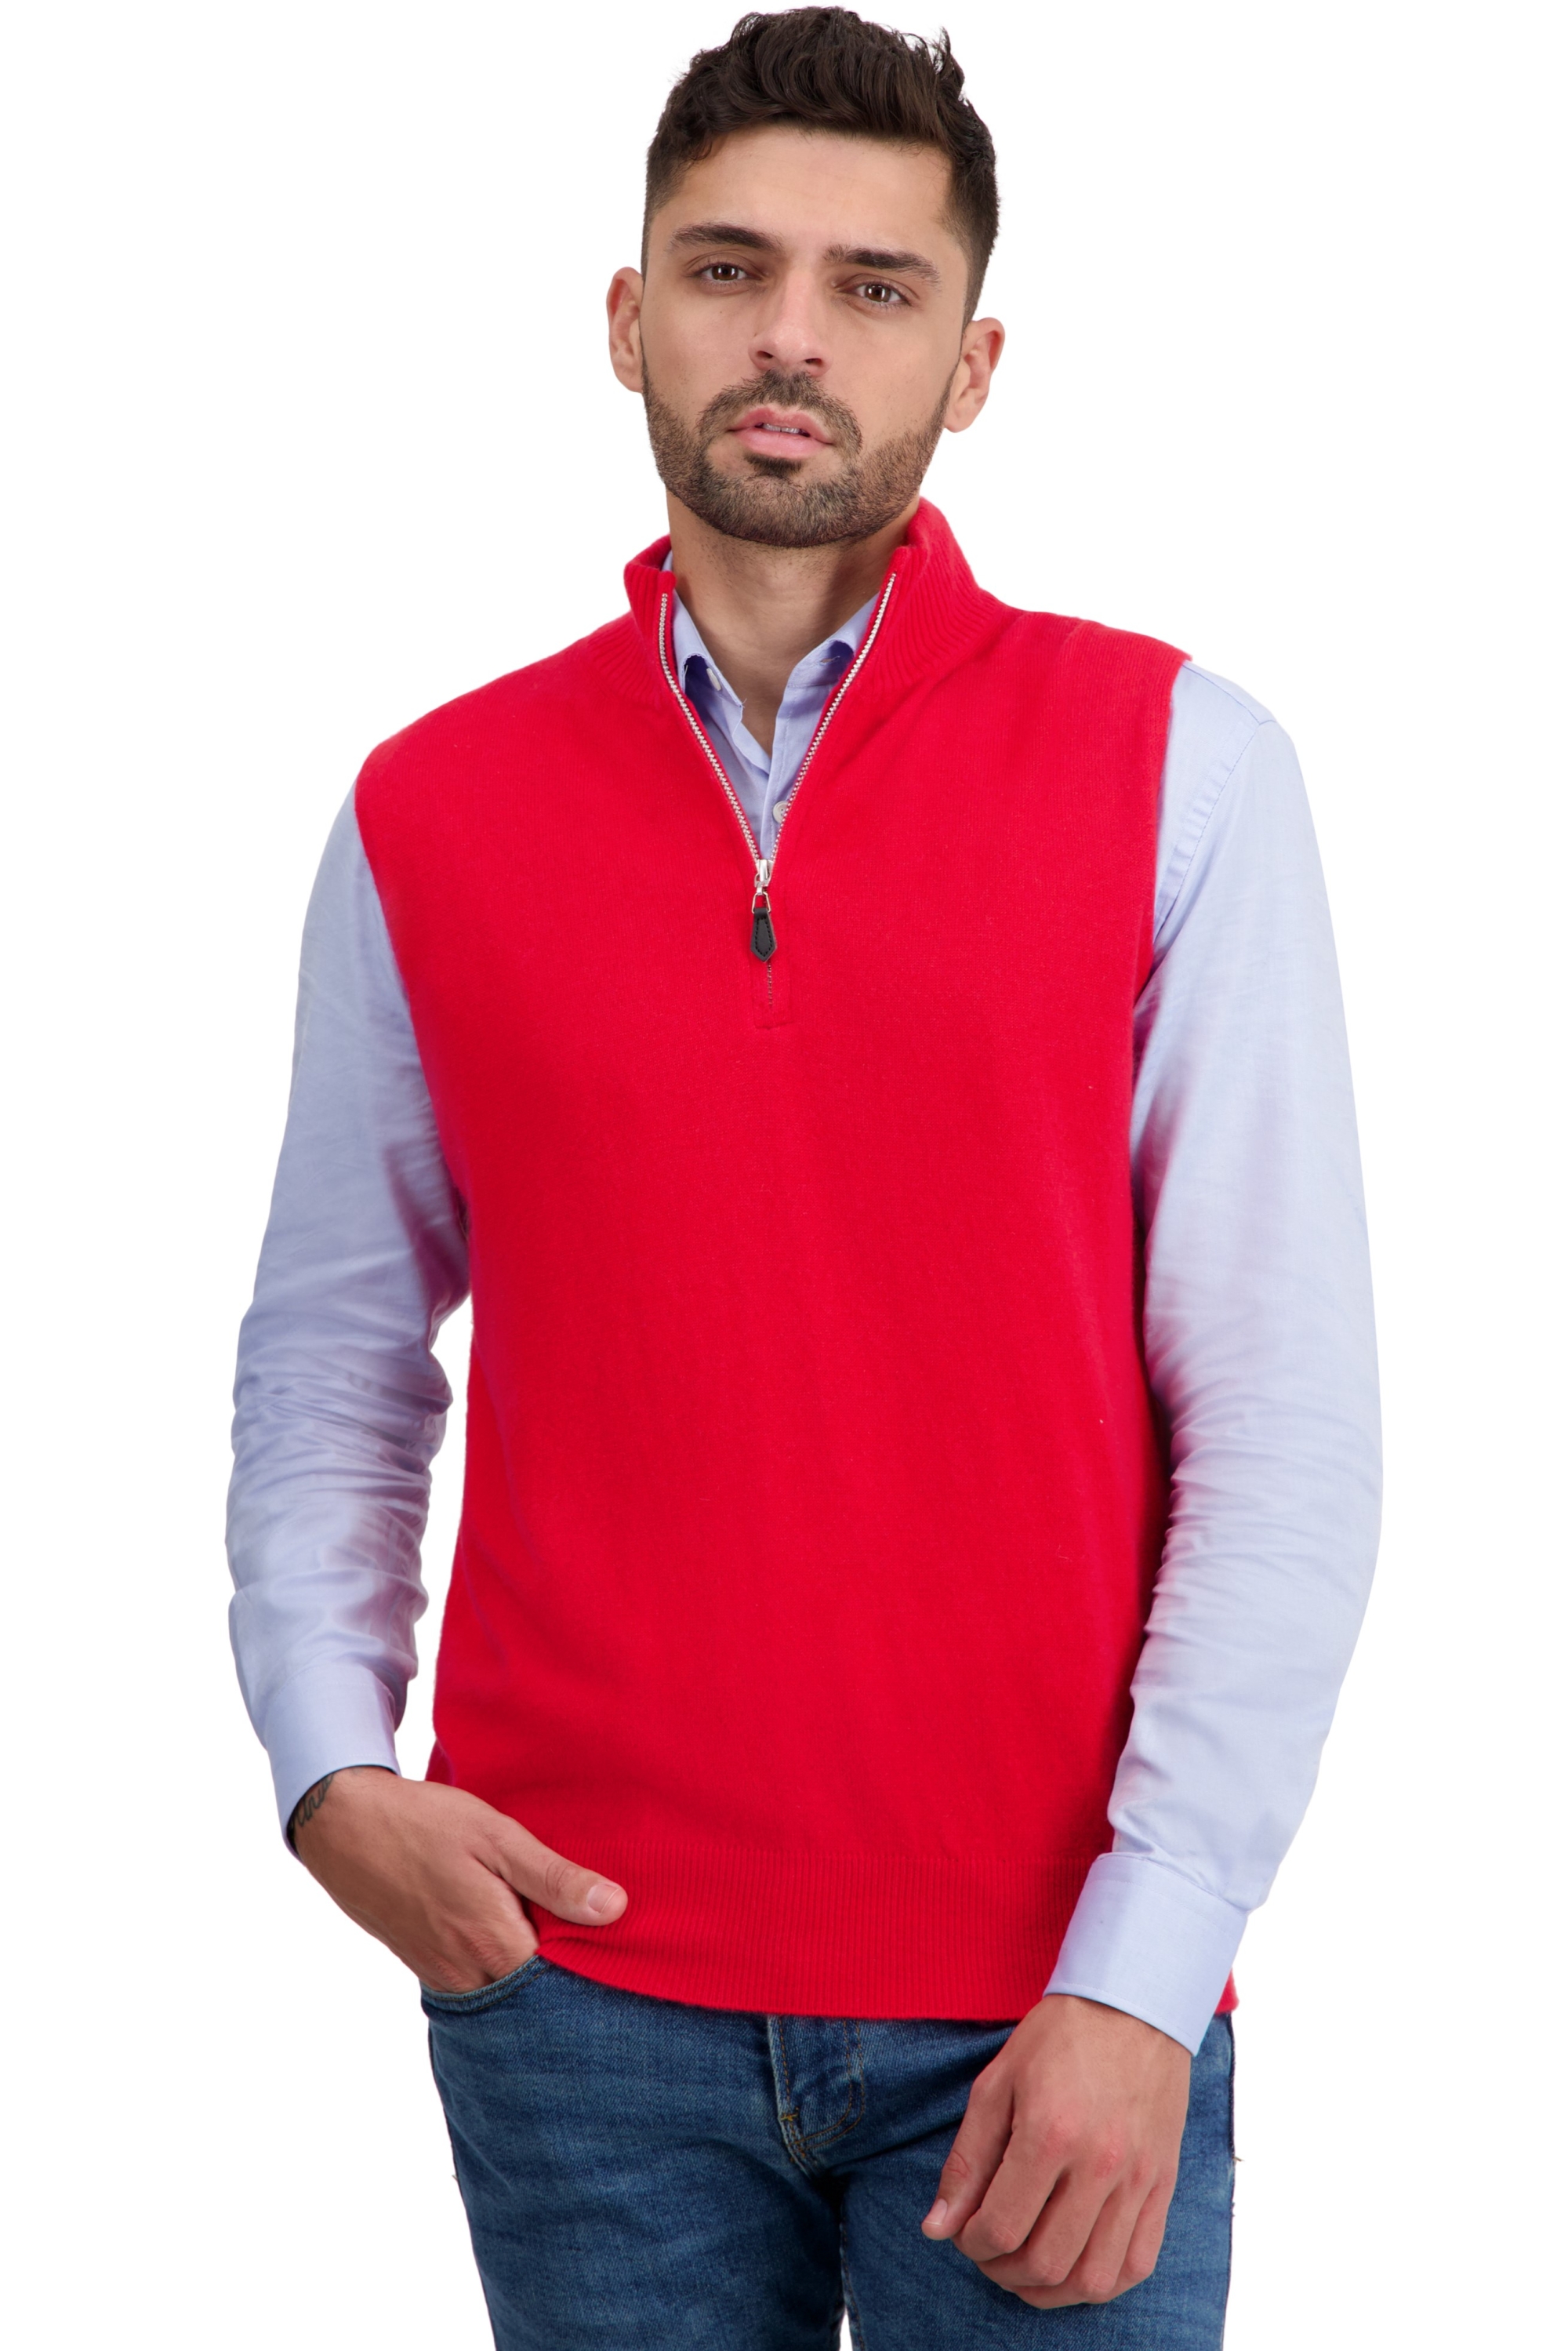 Cashmere men waistcoat sleeveless sweaters texas rouge 4xl